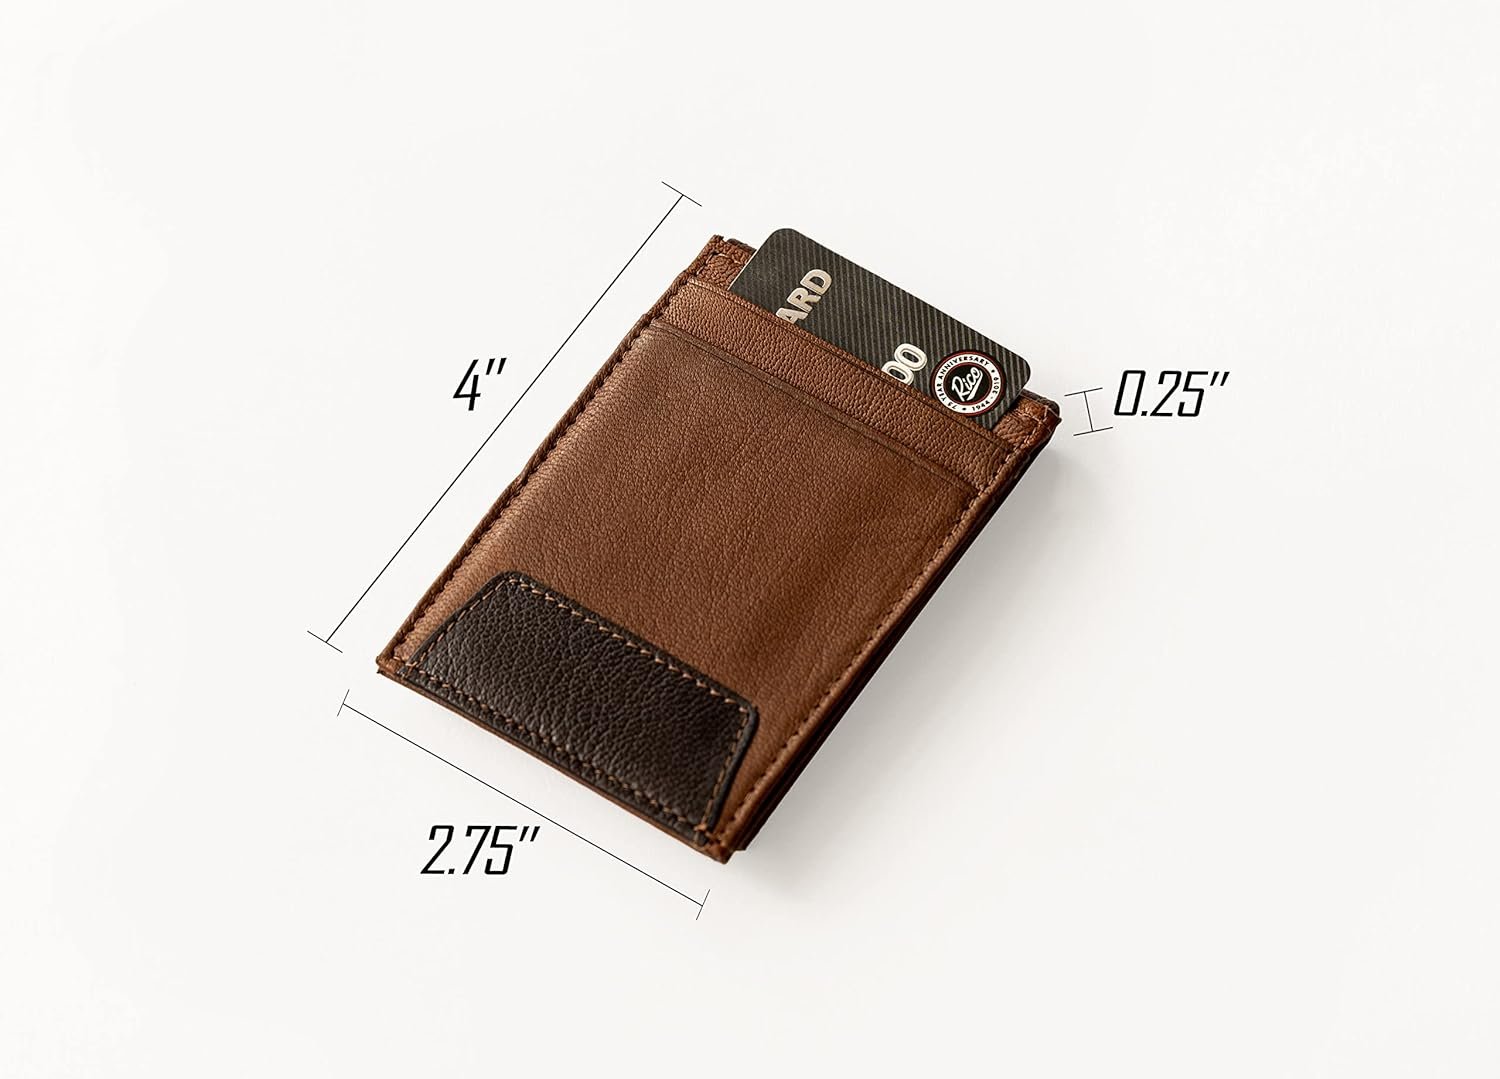 Phoenix Suns Premium Brown Leather Wallet, Front Pocket Magnetic Money Clip, Laser Engraved, Vegan